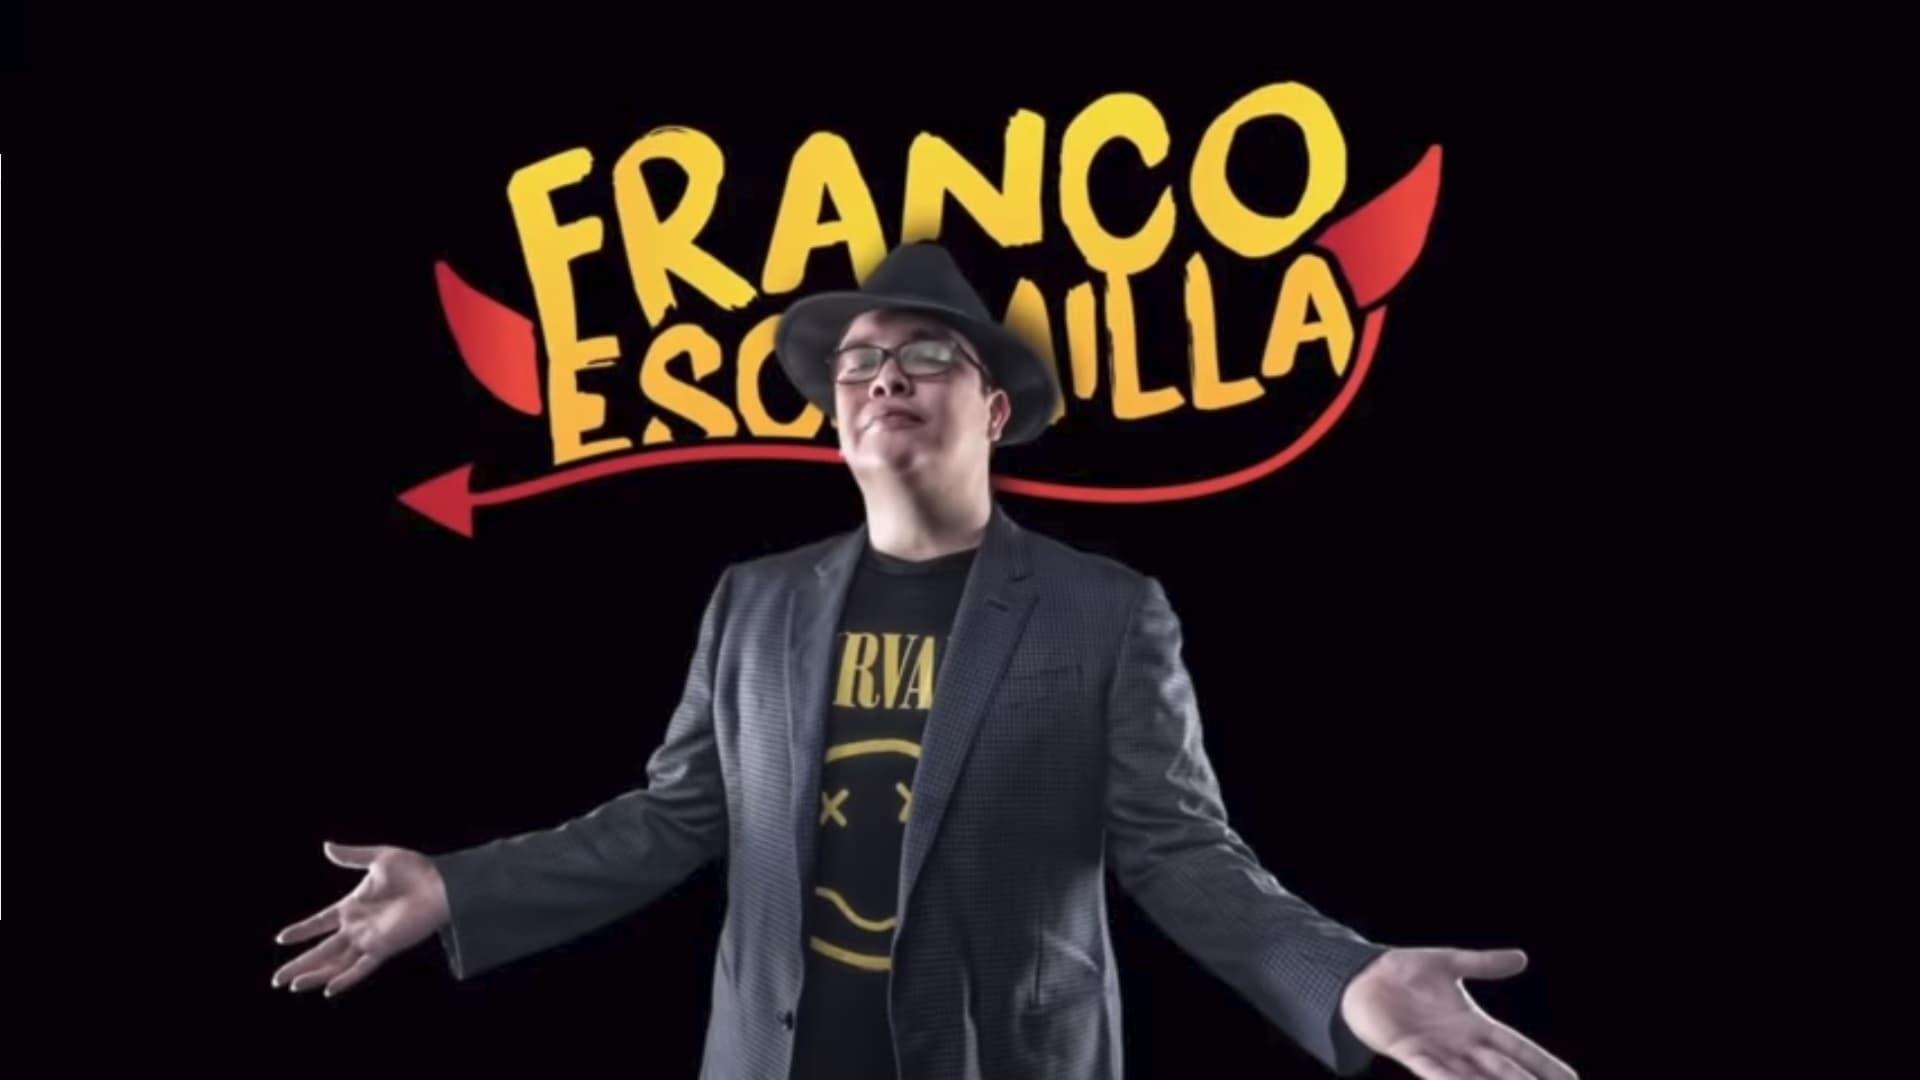 Franco Escamilla: And that's it! backdrop